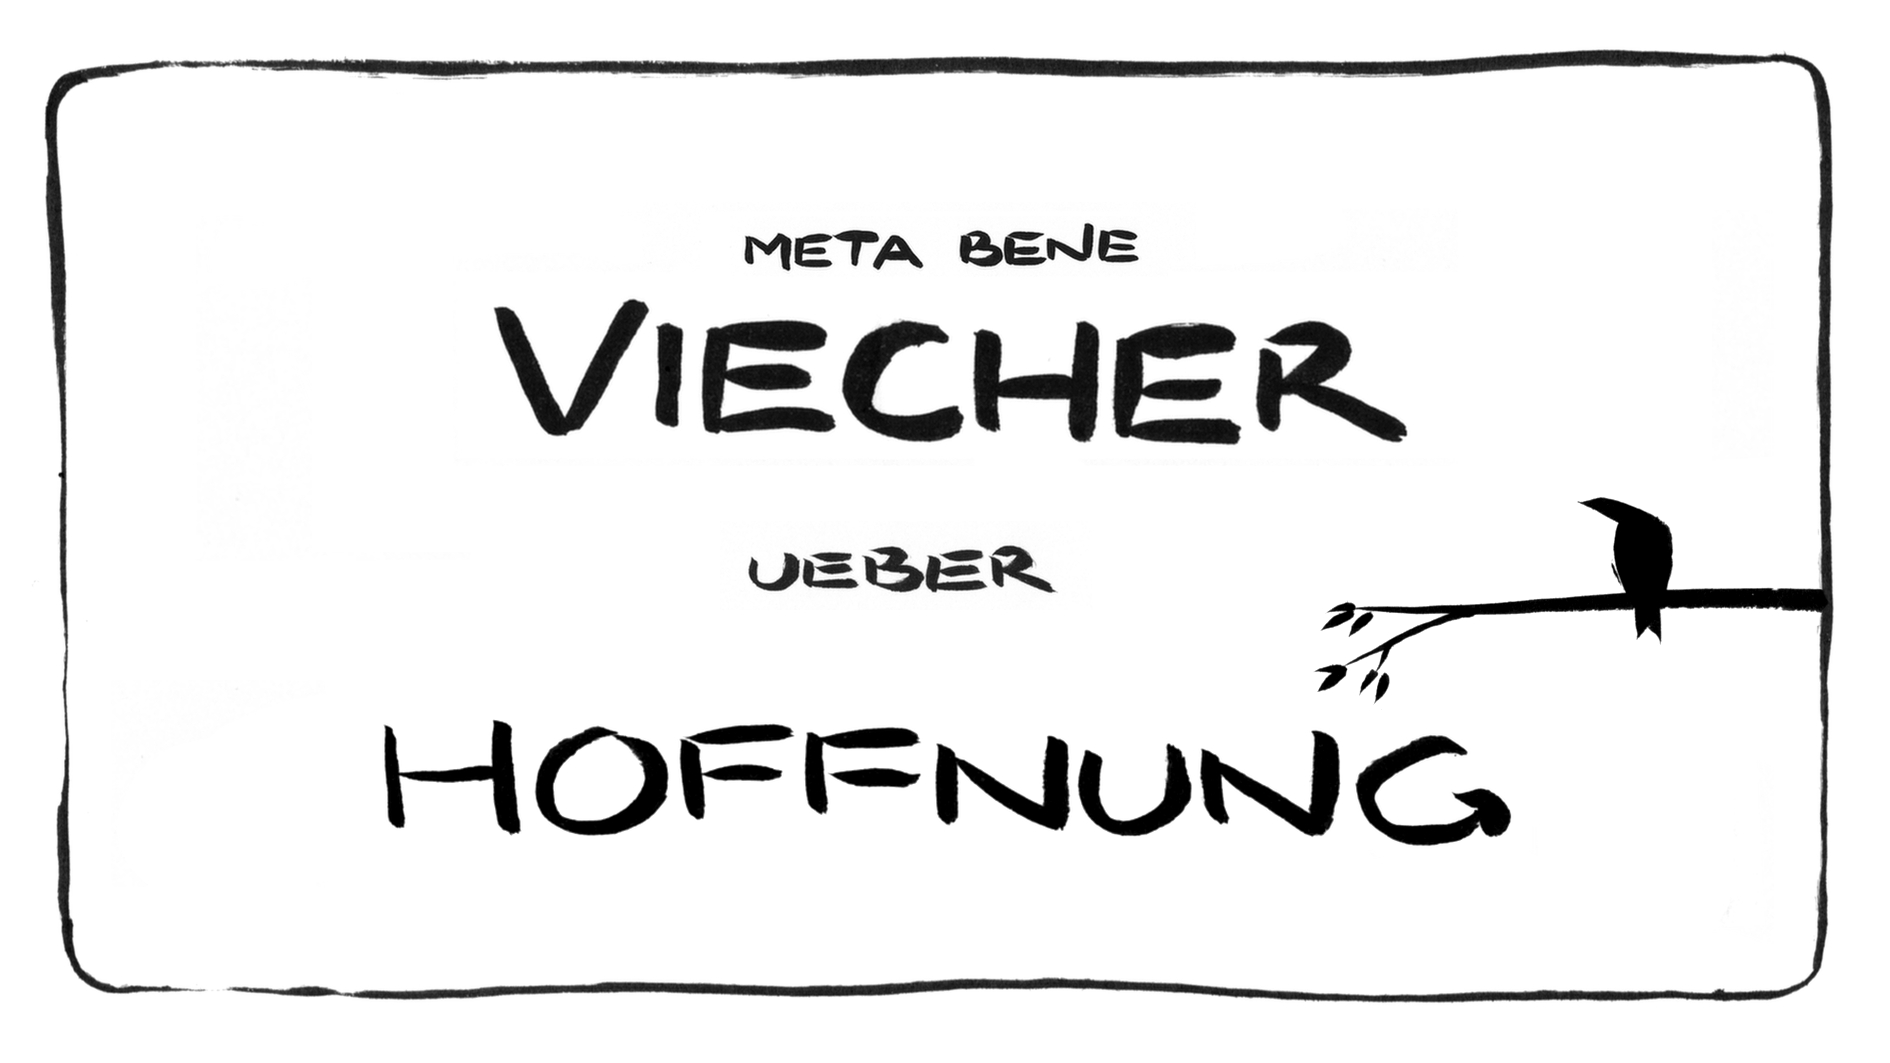 Viecher_13_hoffnung_titel